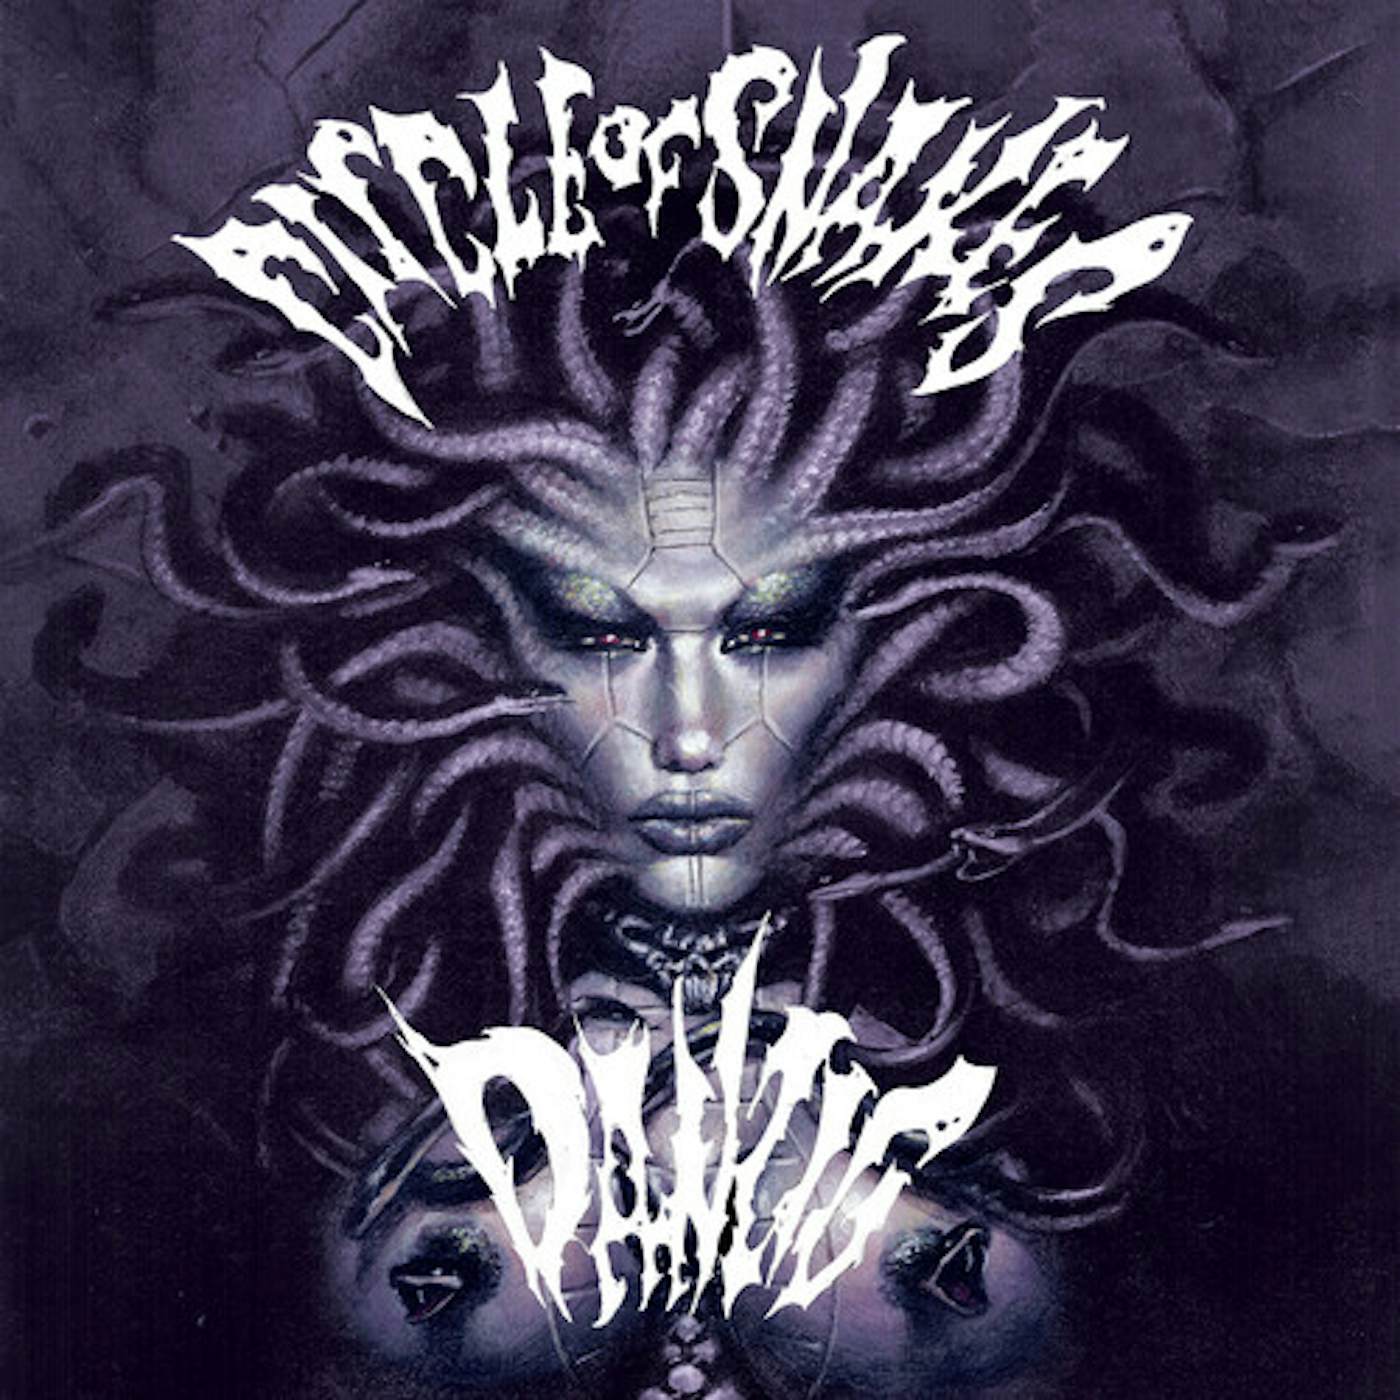 Danzig Circle Of Snakes - Black/Purple Haze Vinyl Record